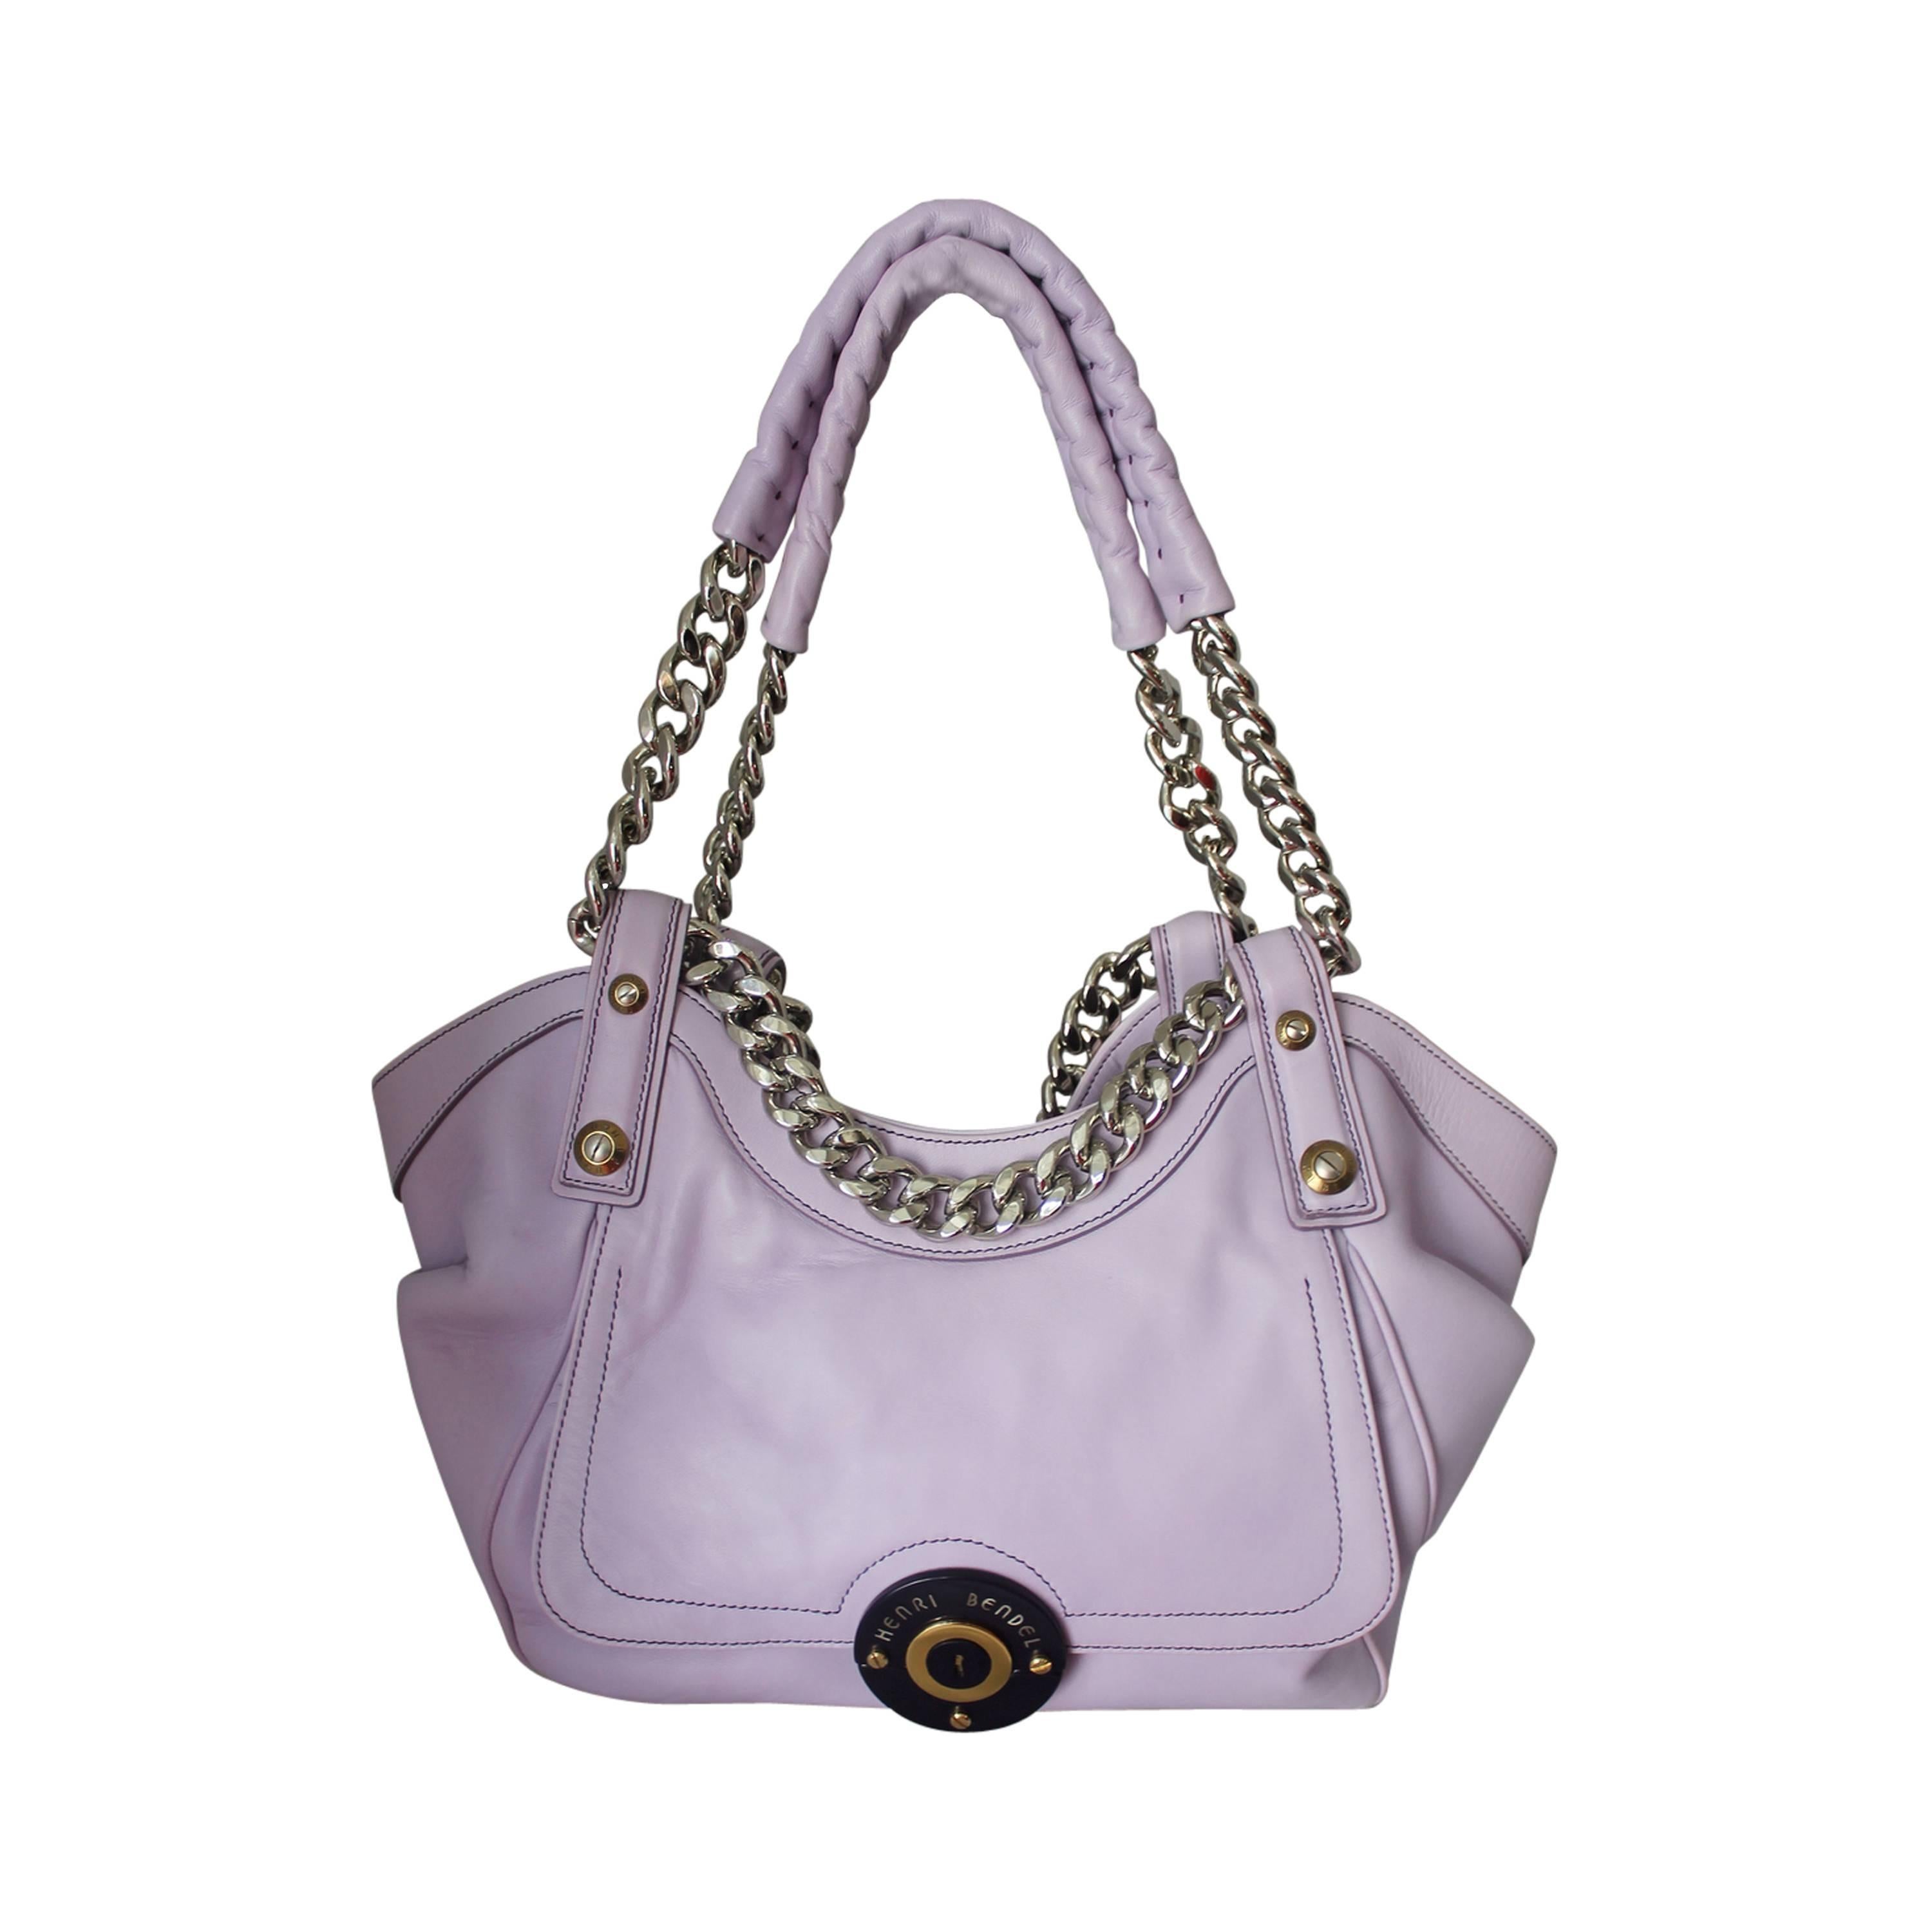 Henri Bendel Lavender Leather Handbag with Silver Chain